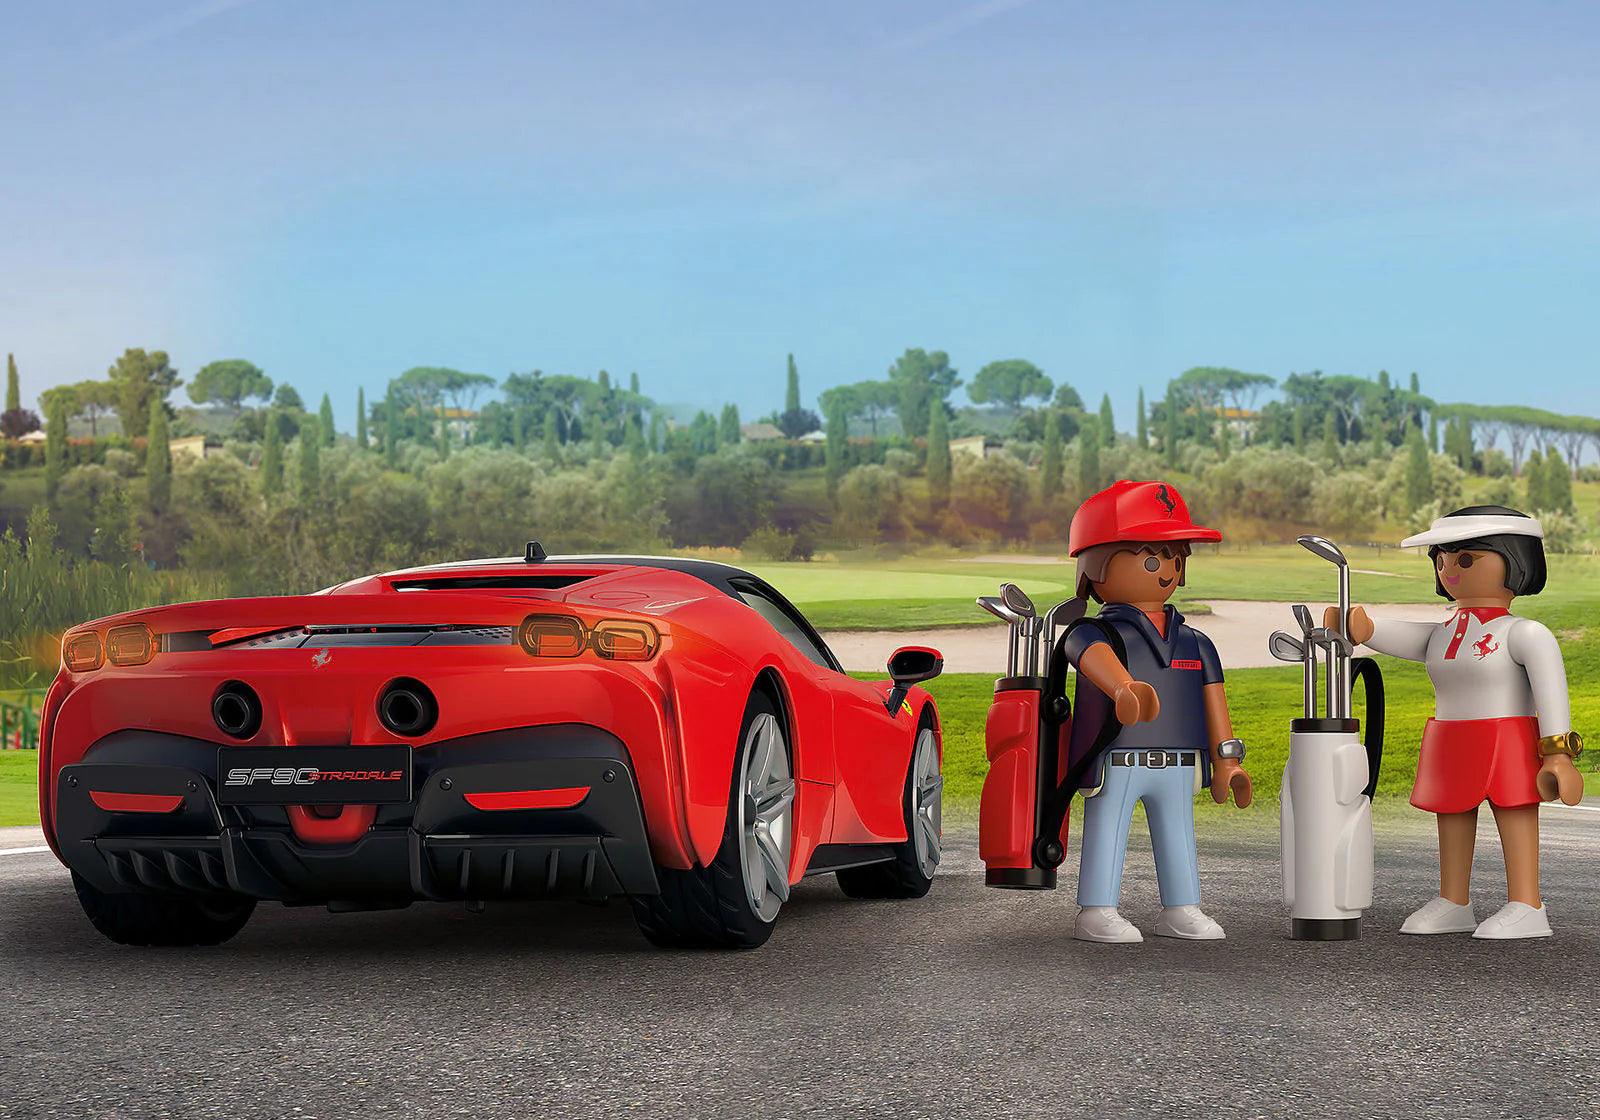 Playmobil Ferrari play scene (7771643150535)